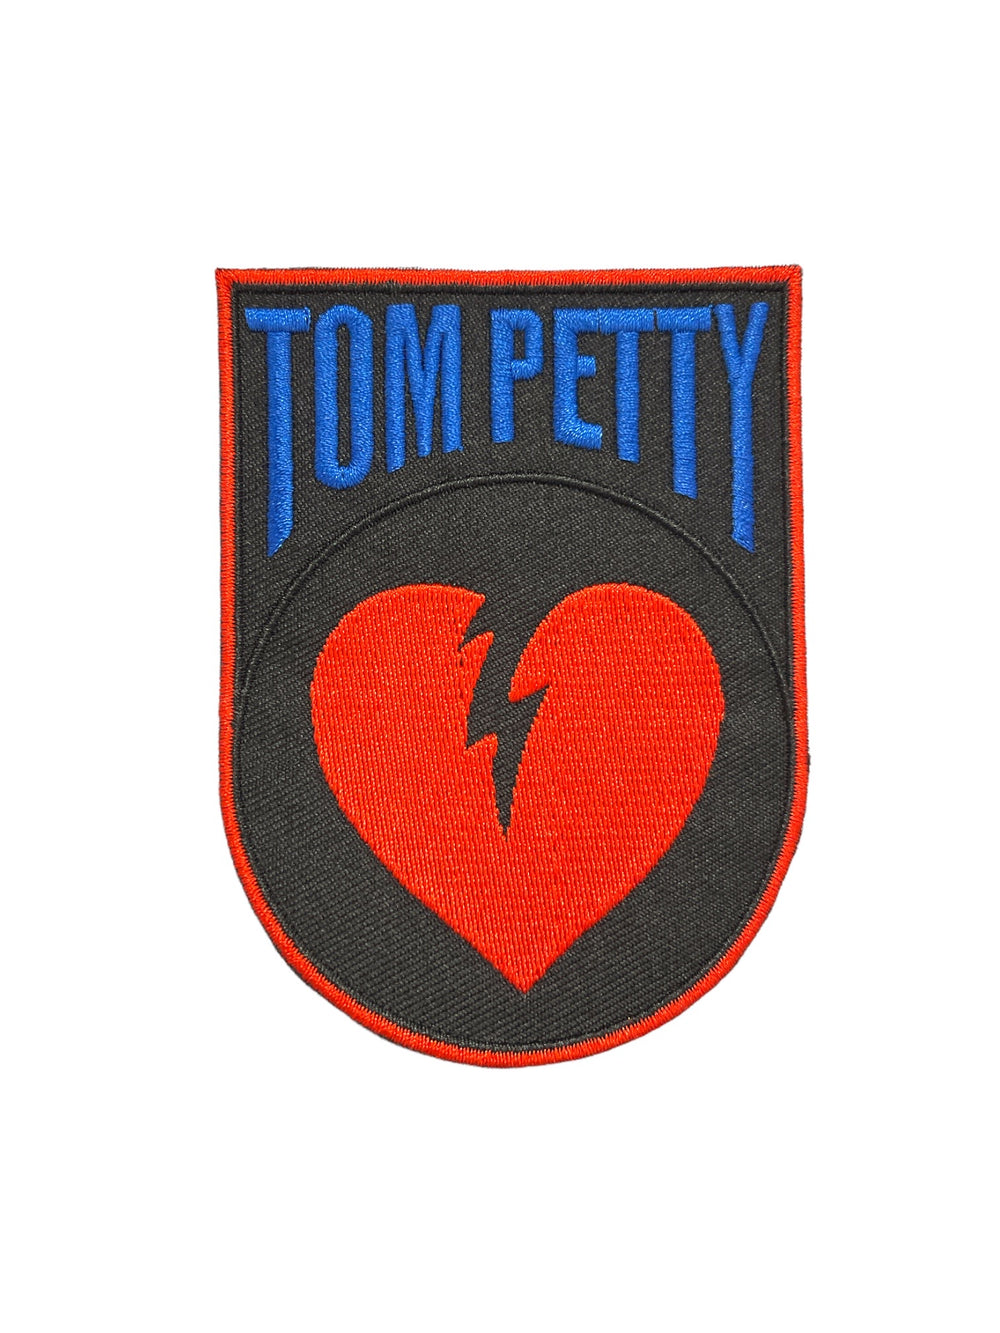 Tom Petty Broken Heart Official Woven Patch Brand New